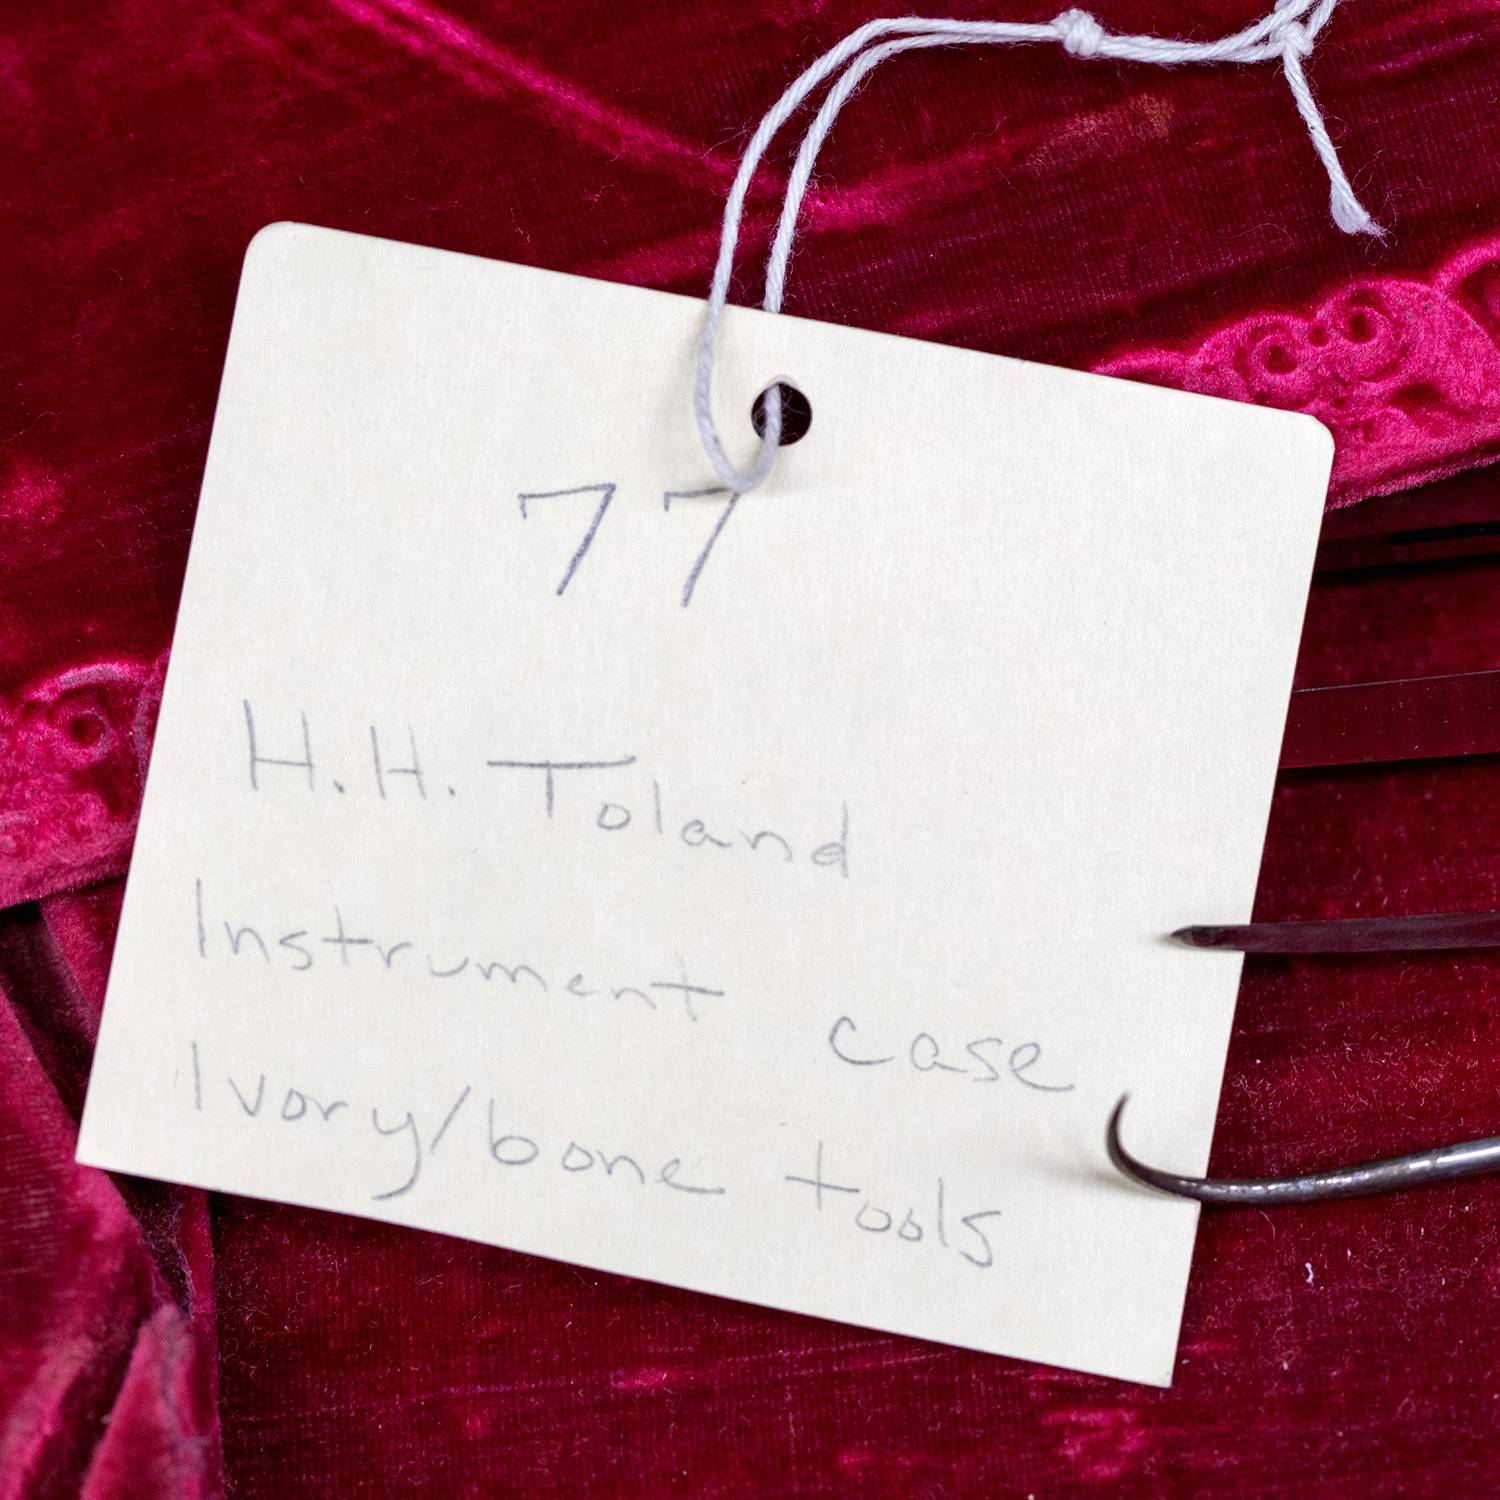 A label on Hugh Toland's instrument case reads 77/H.H. Toland/Instrument case/Ivory bone tools